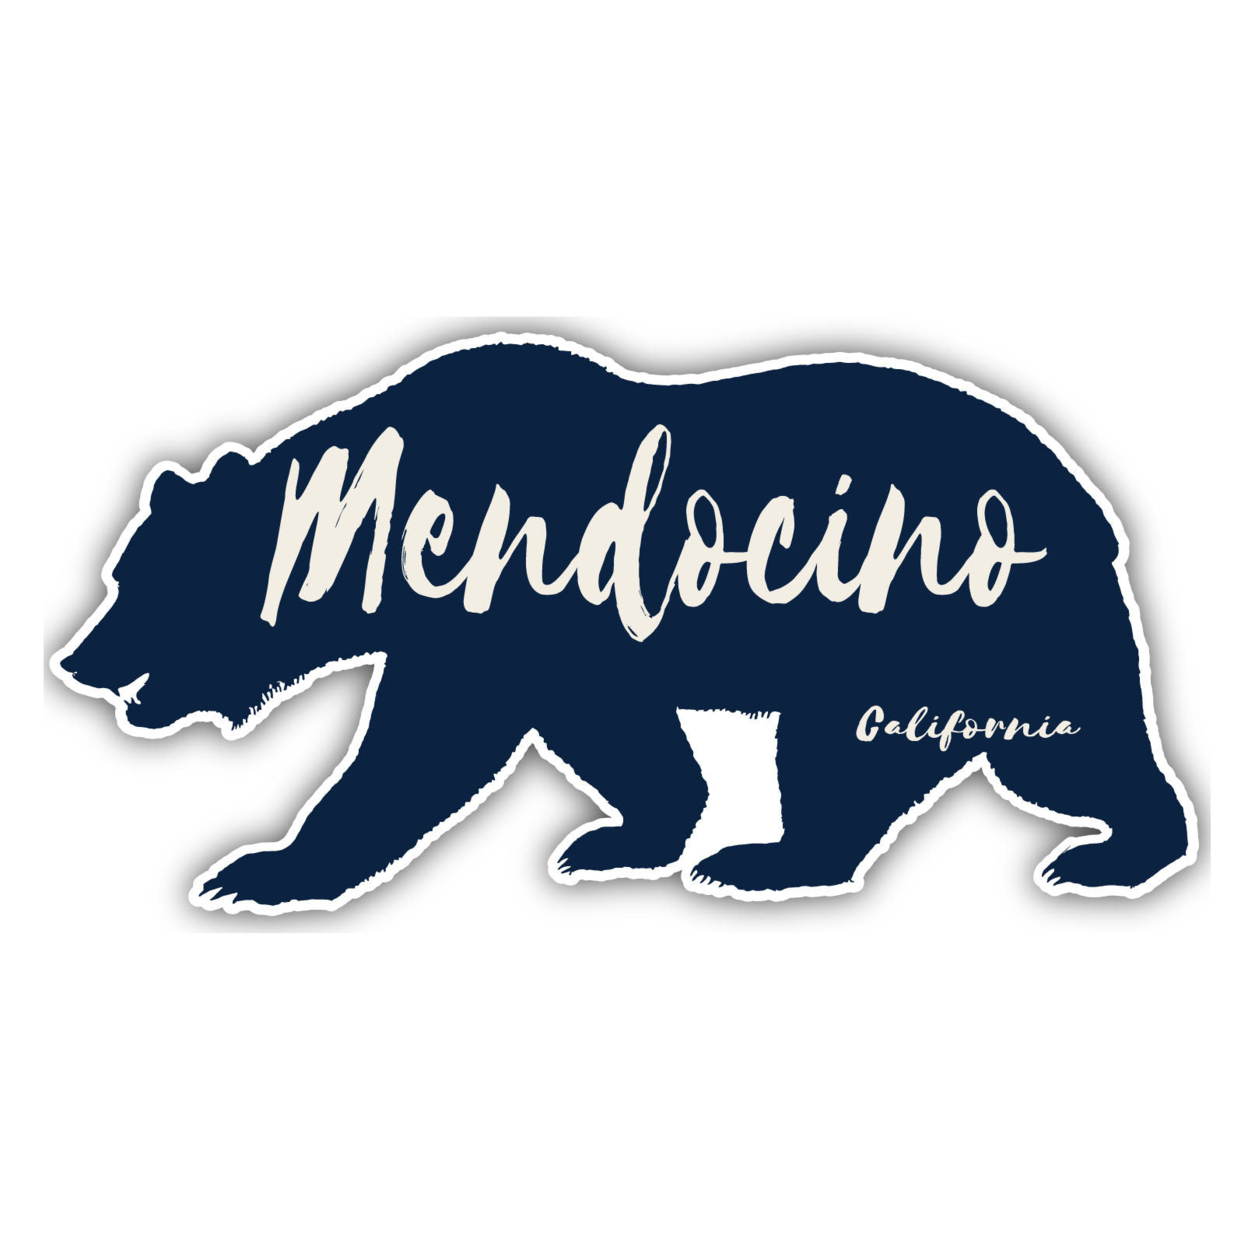 Mendocino California Souvenir Decorative Stickers (Choose Theme And Size) - 4-Inch, Bear